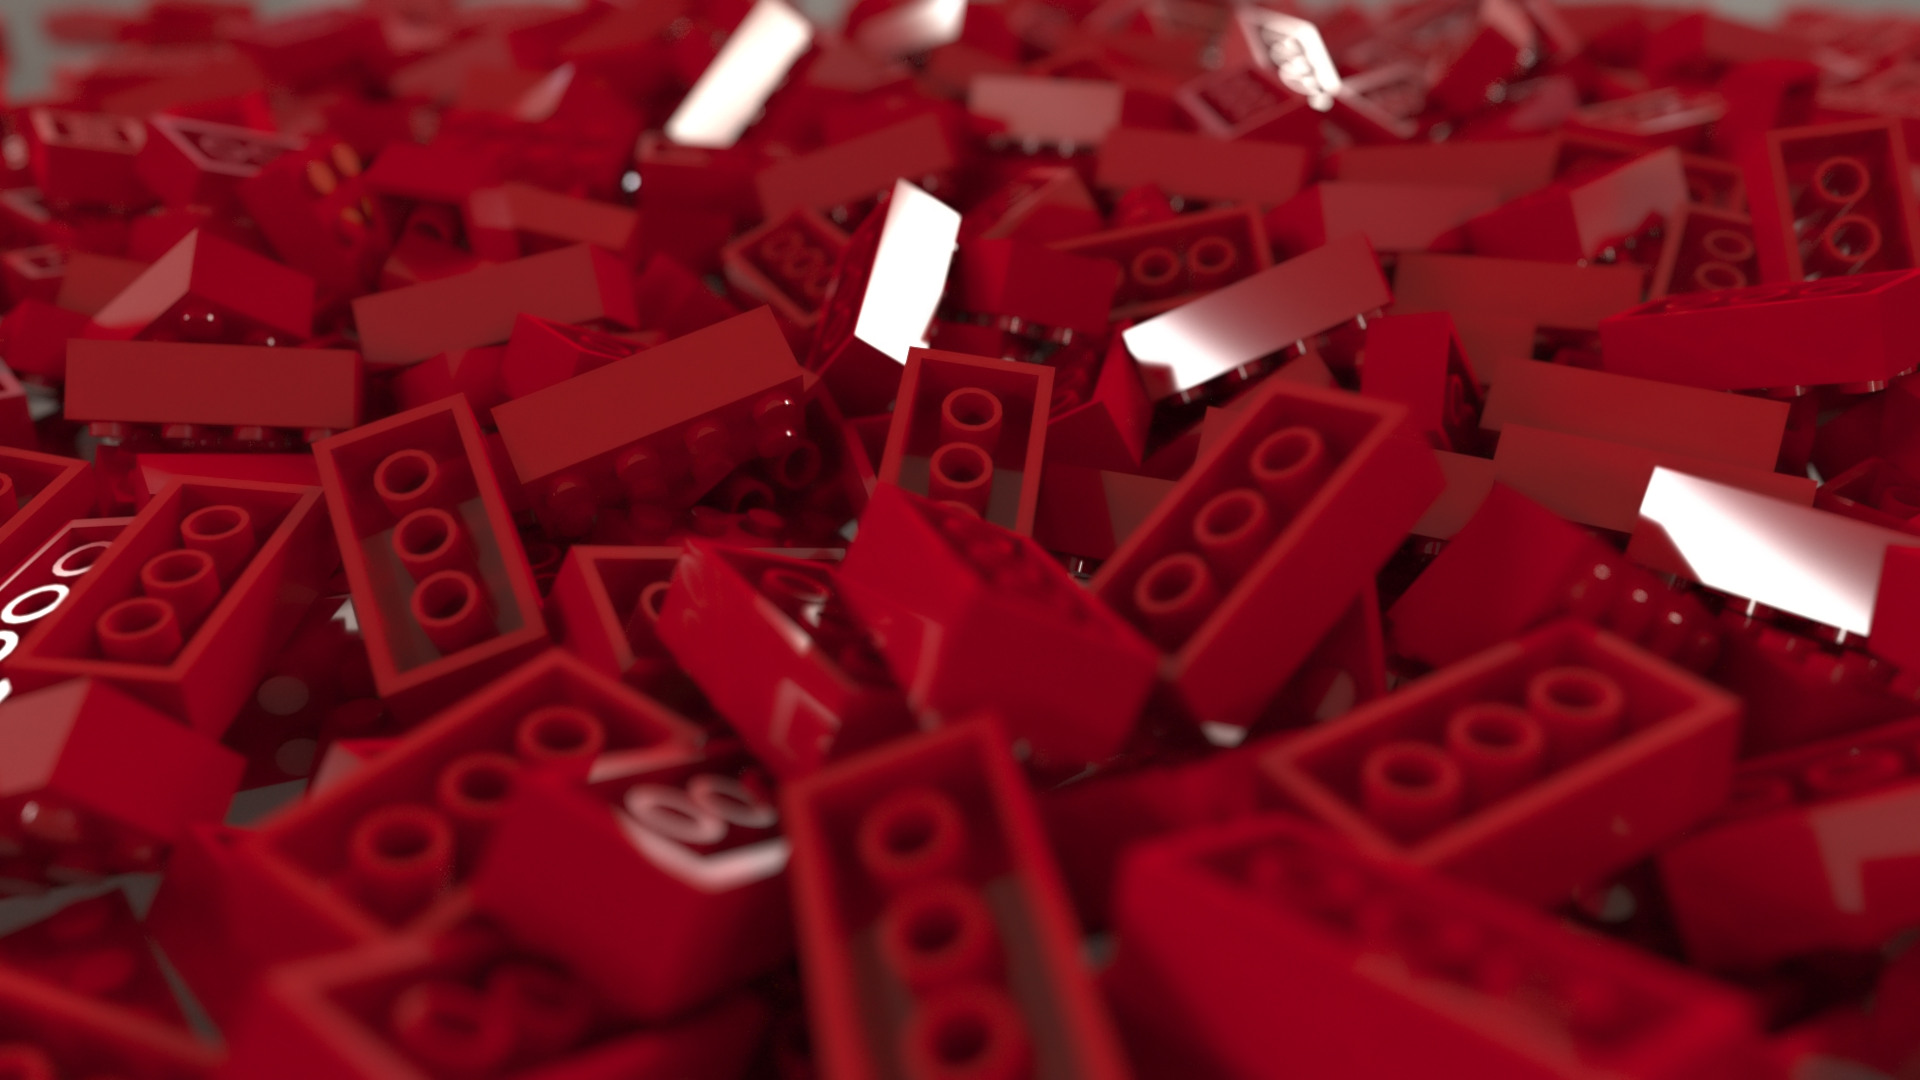 Scattered Lego bricks by aksine 1920x1080